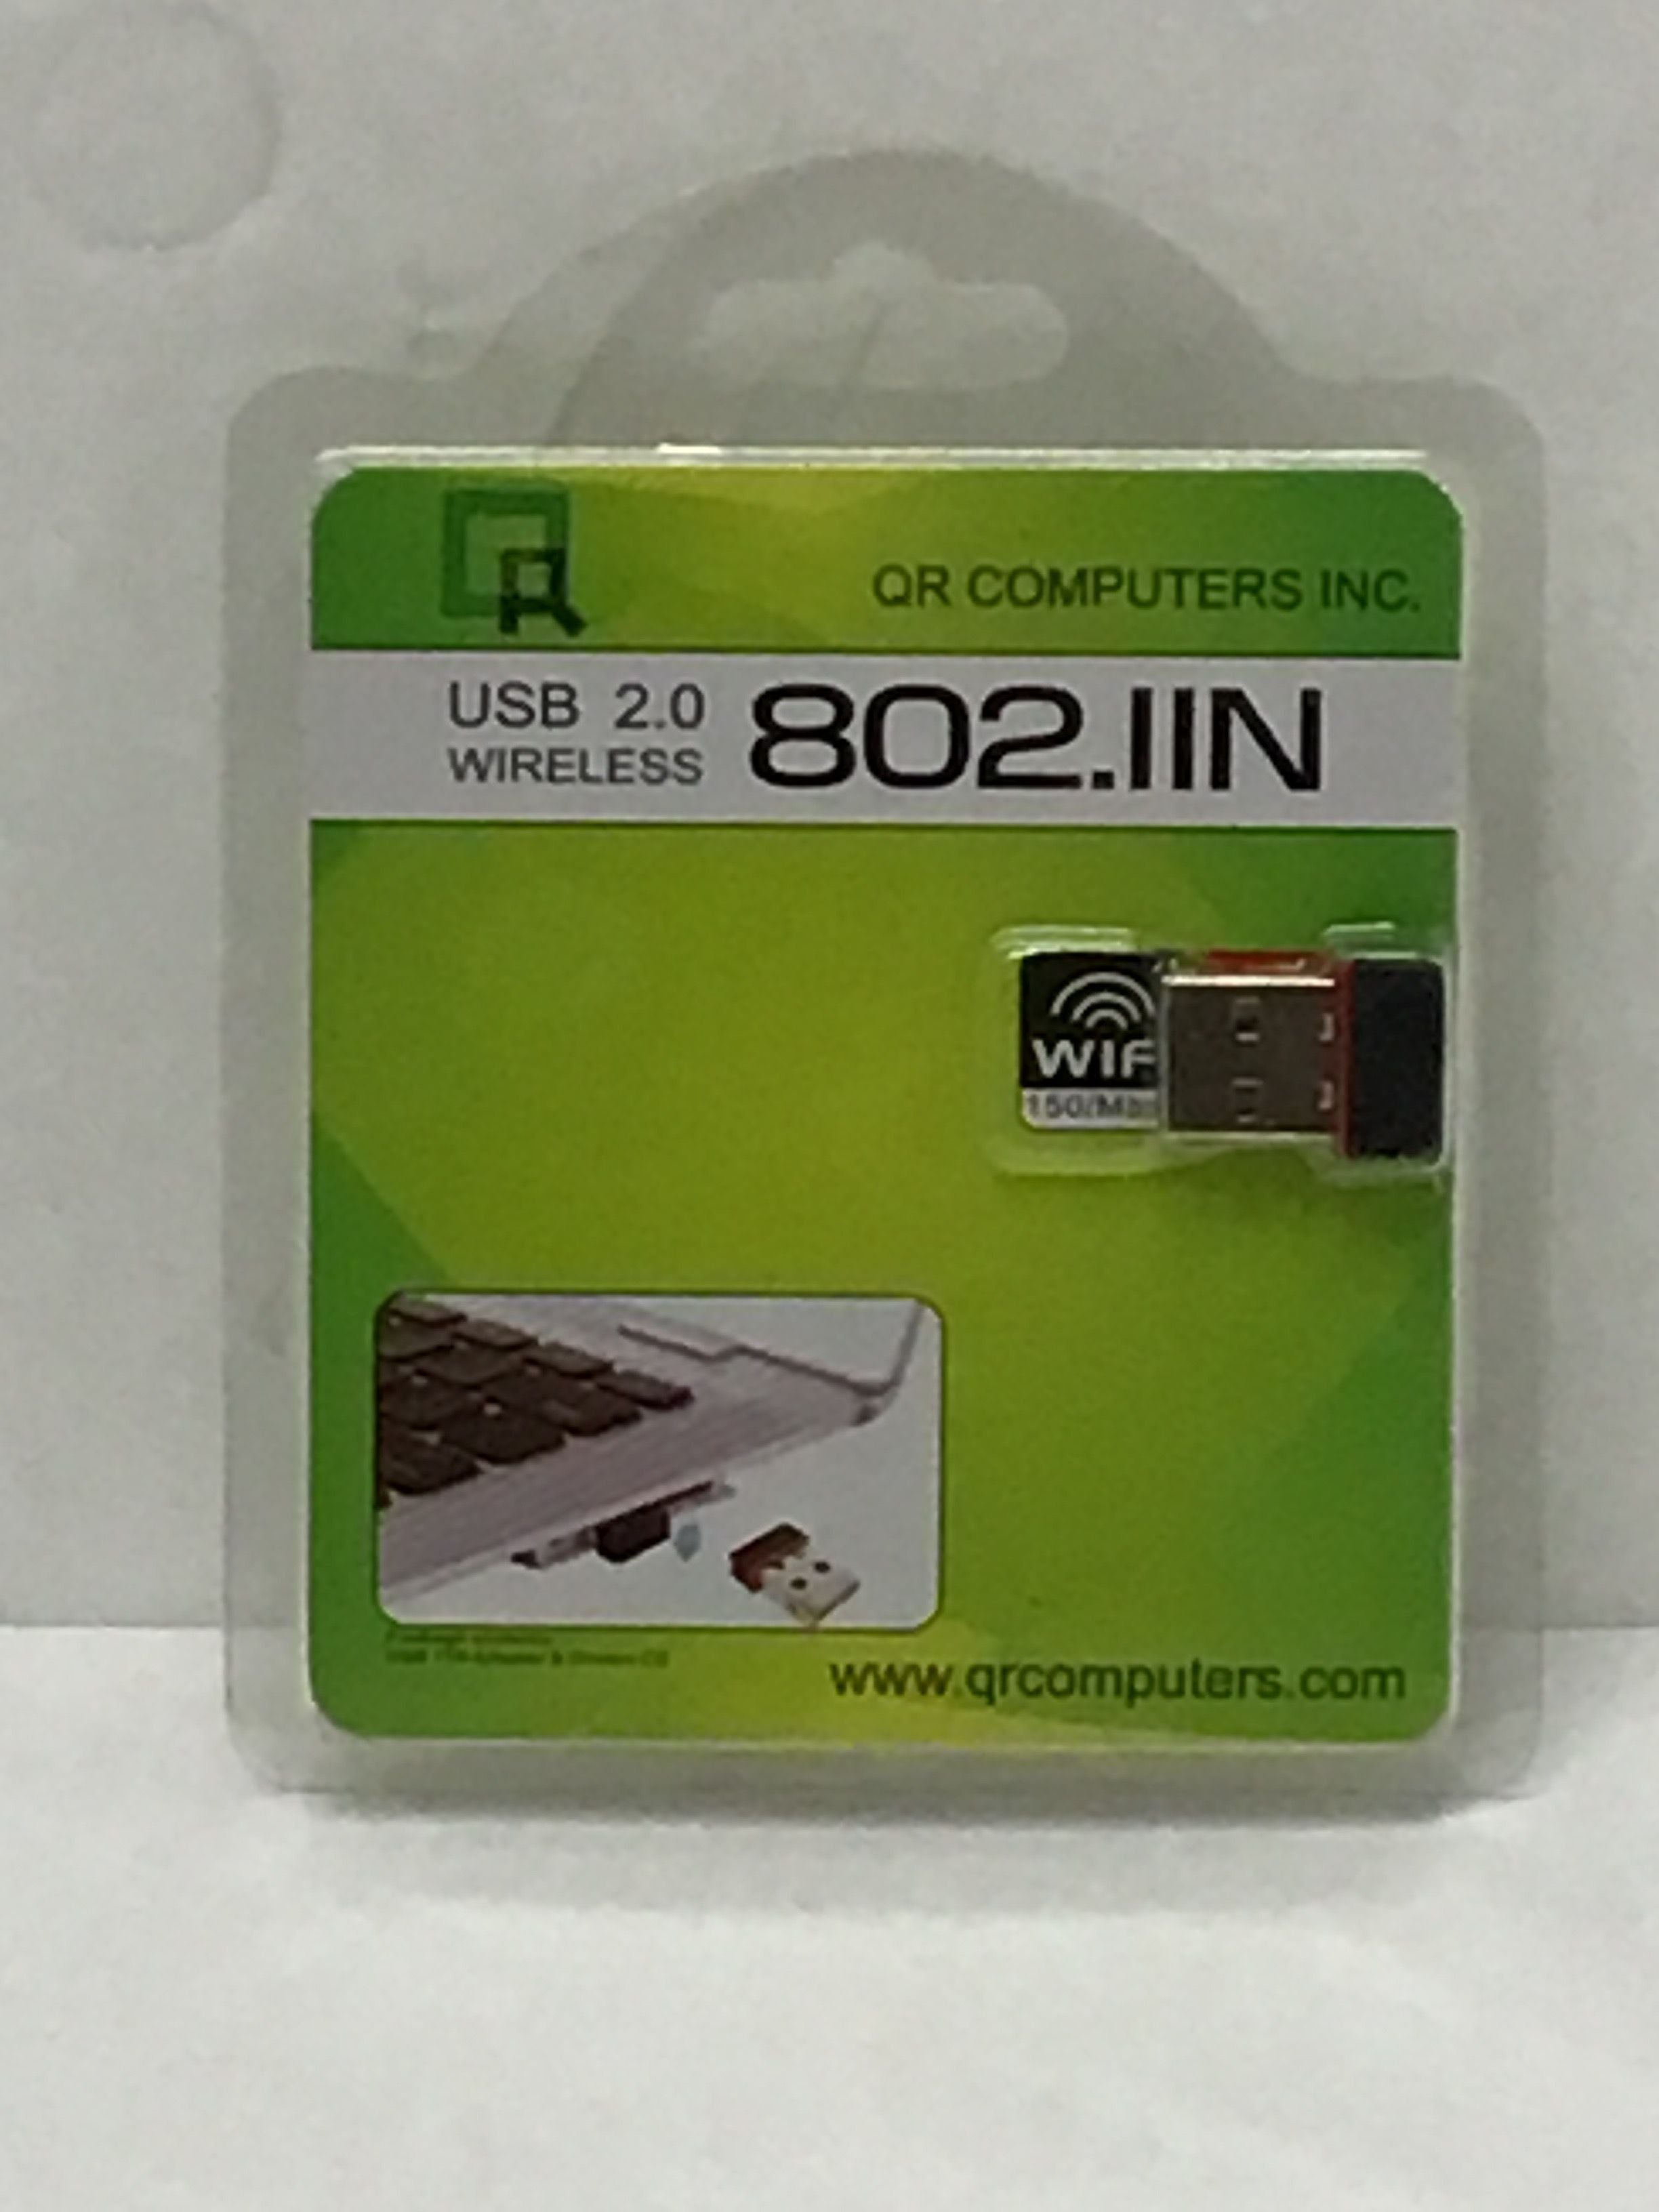 USB 2.0 Wireless Adapter 802.iiN Mac/Windows 0820103 – of All Deals